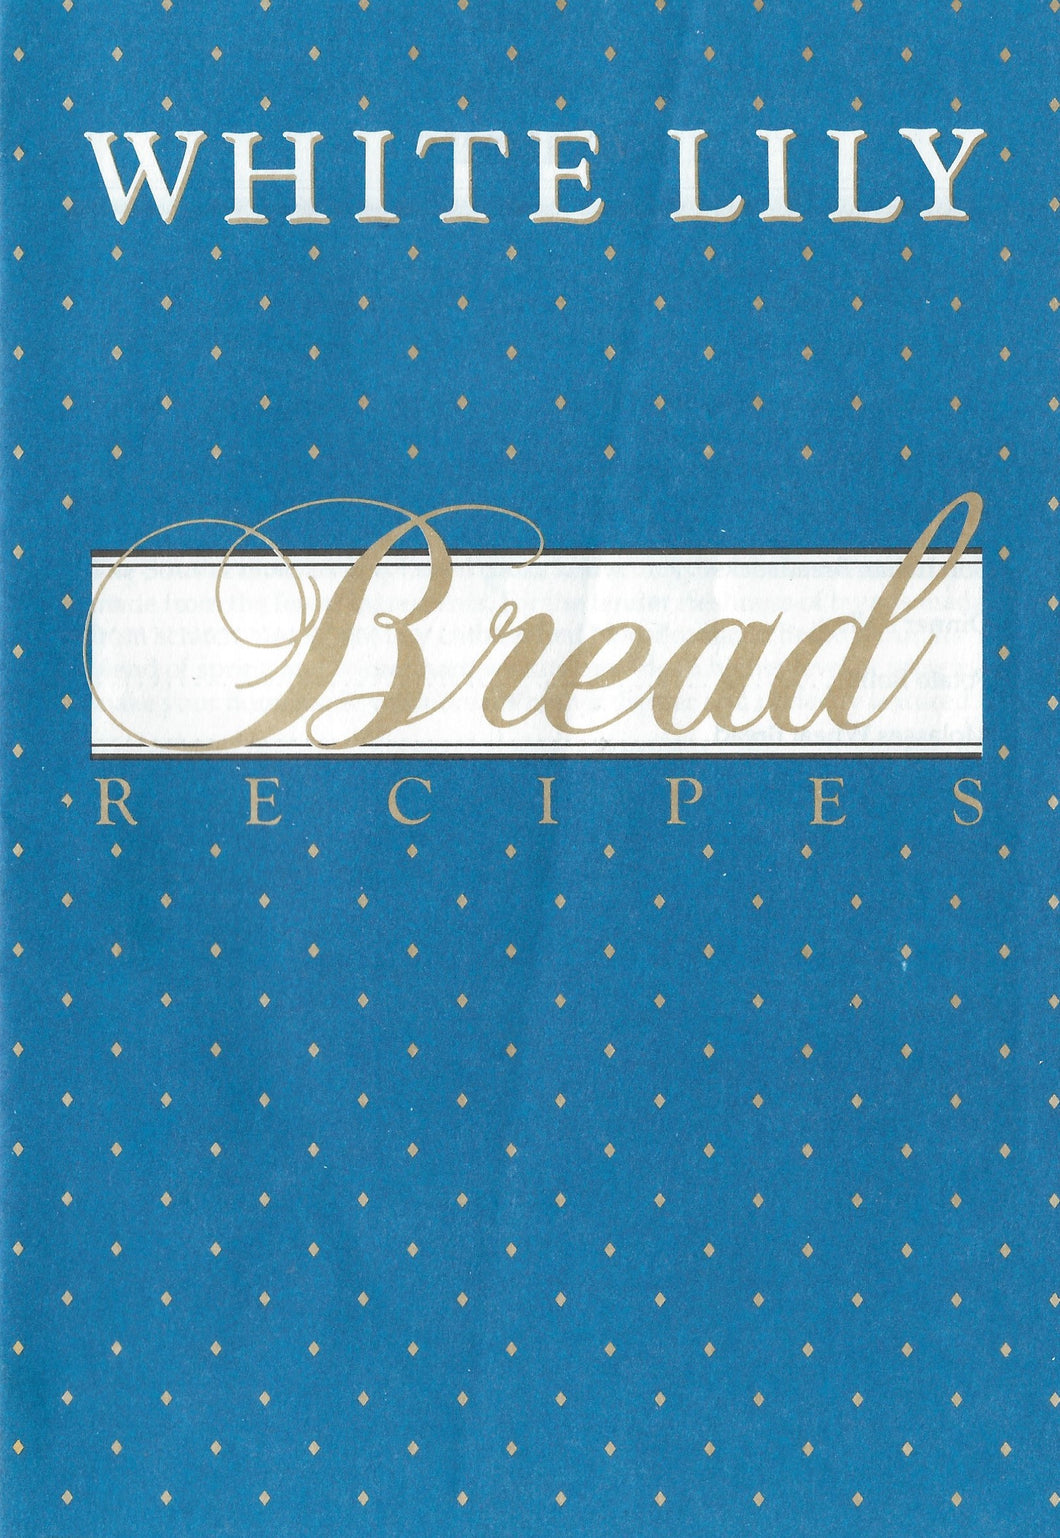 Bread Recipes